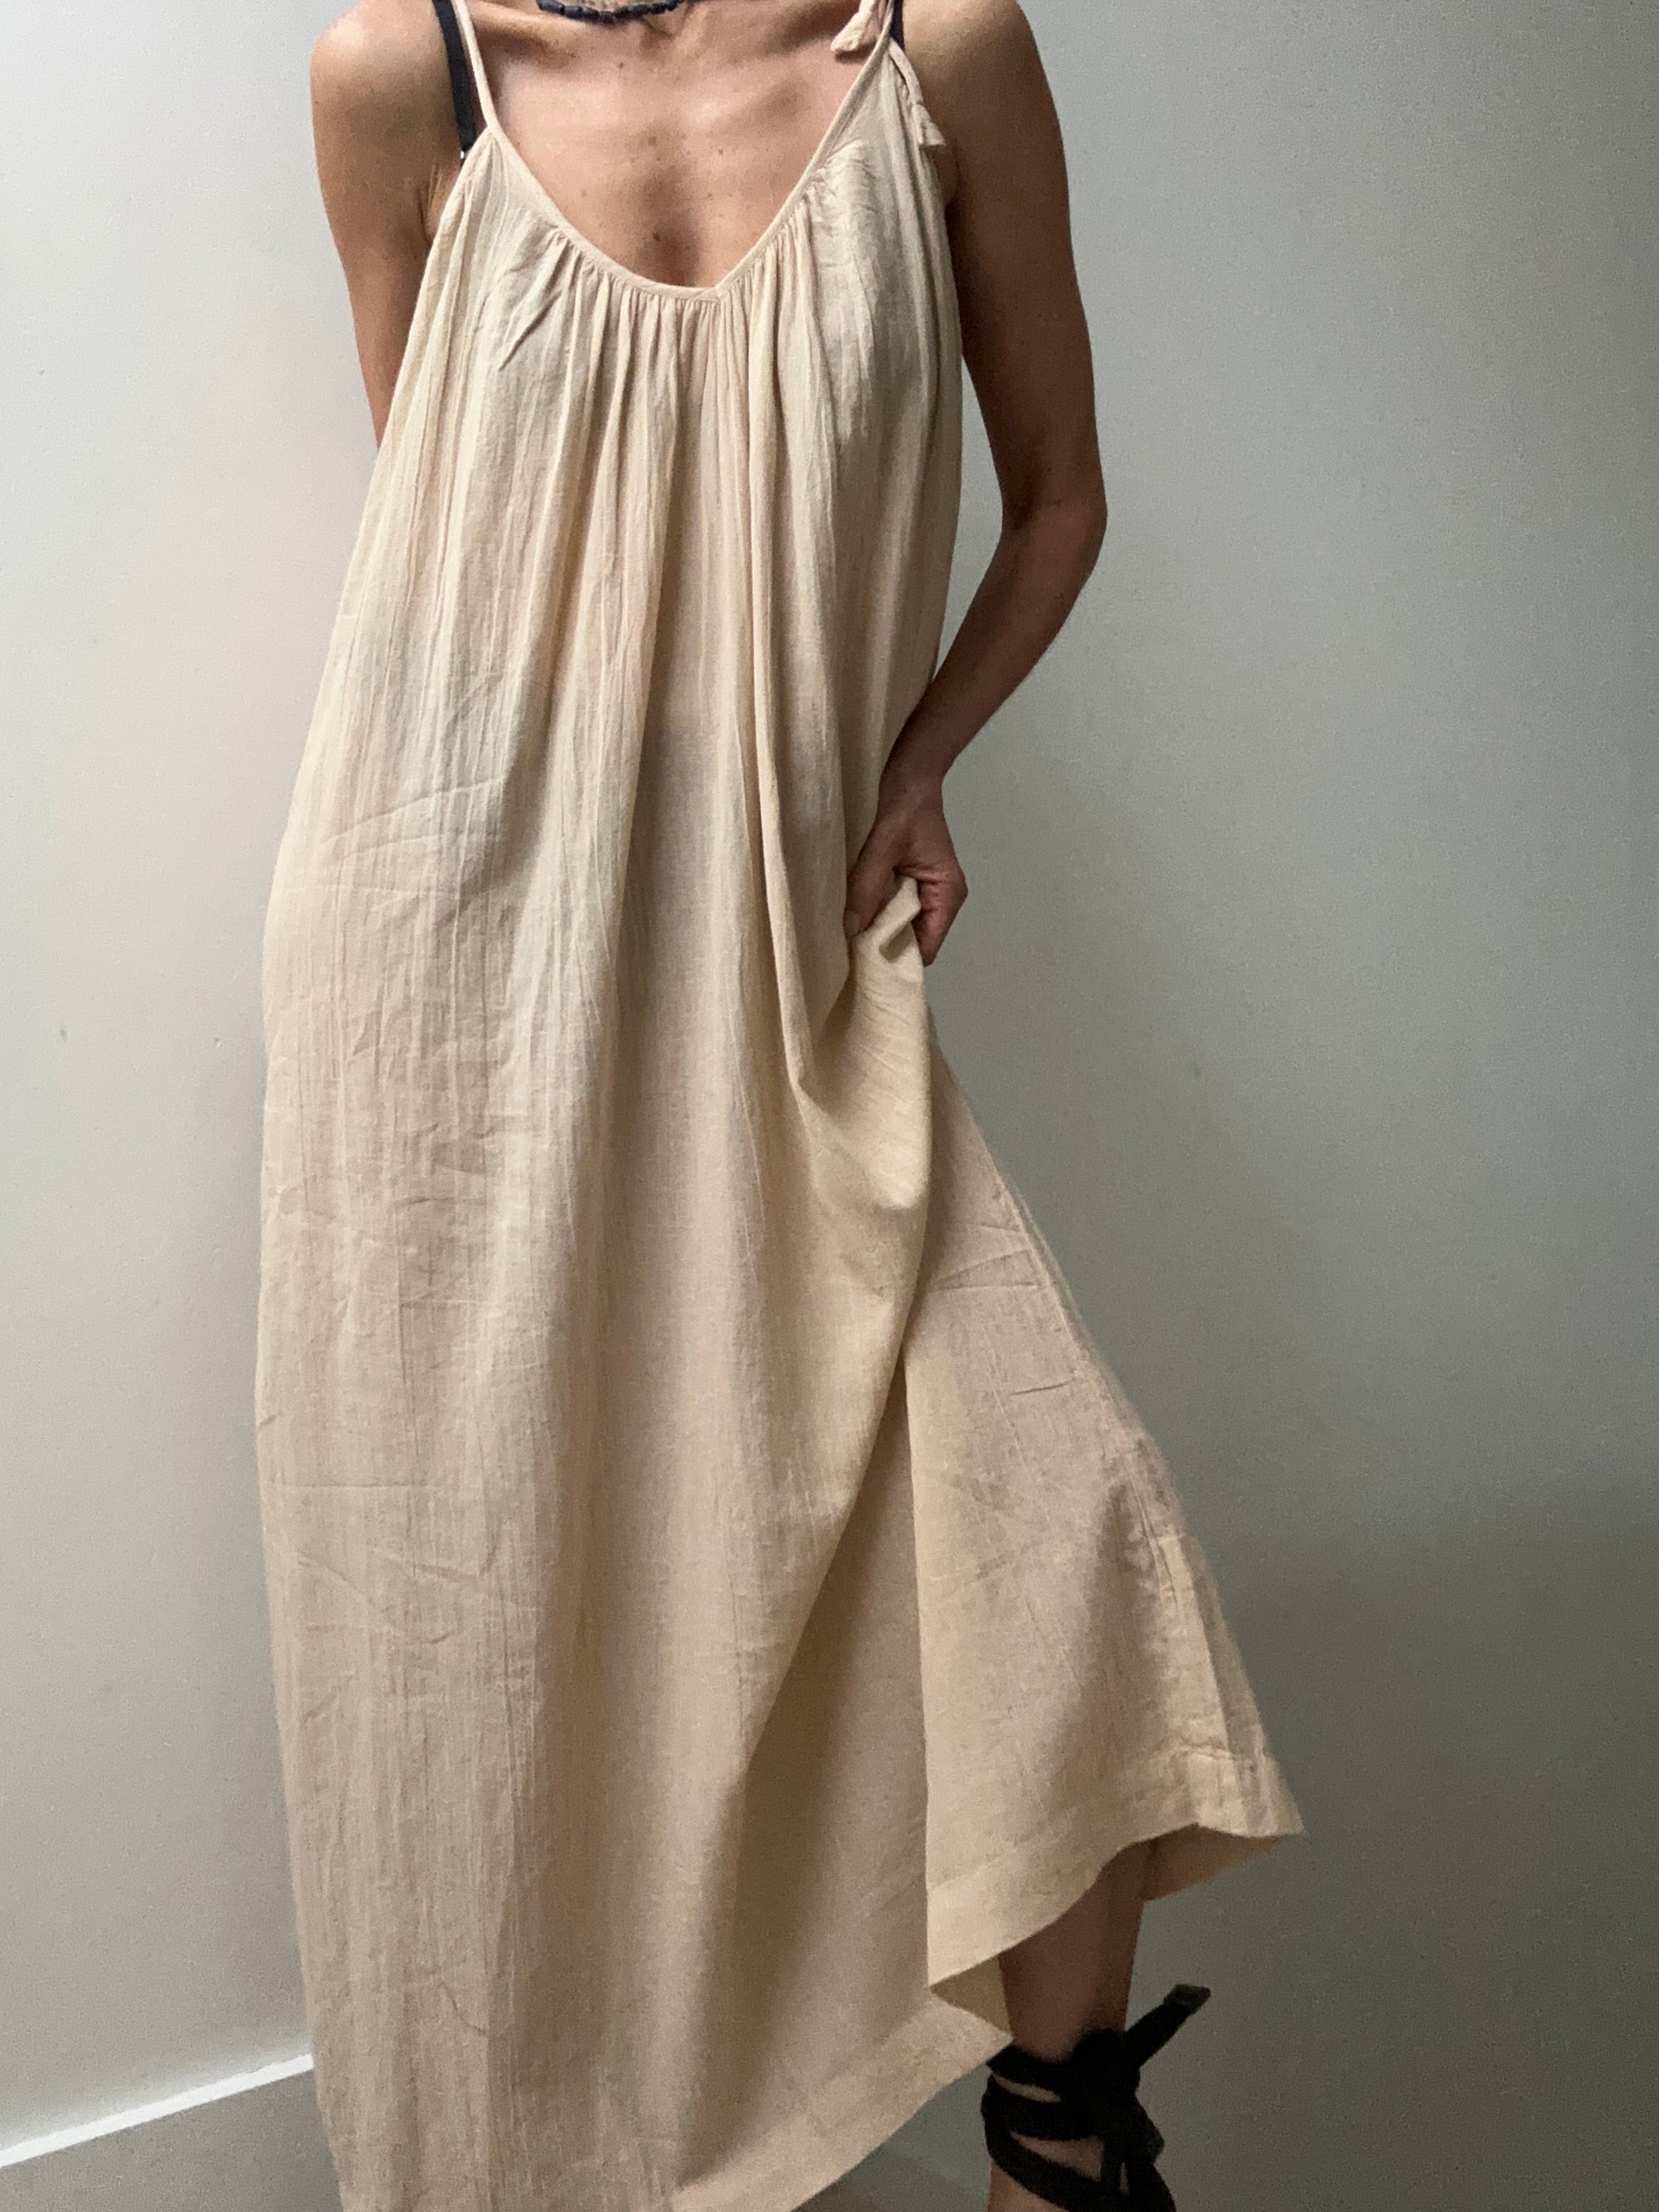 Jetsetbohemian Dresses One Size Tie Strap Cotton Dress in Biege